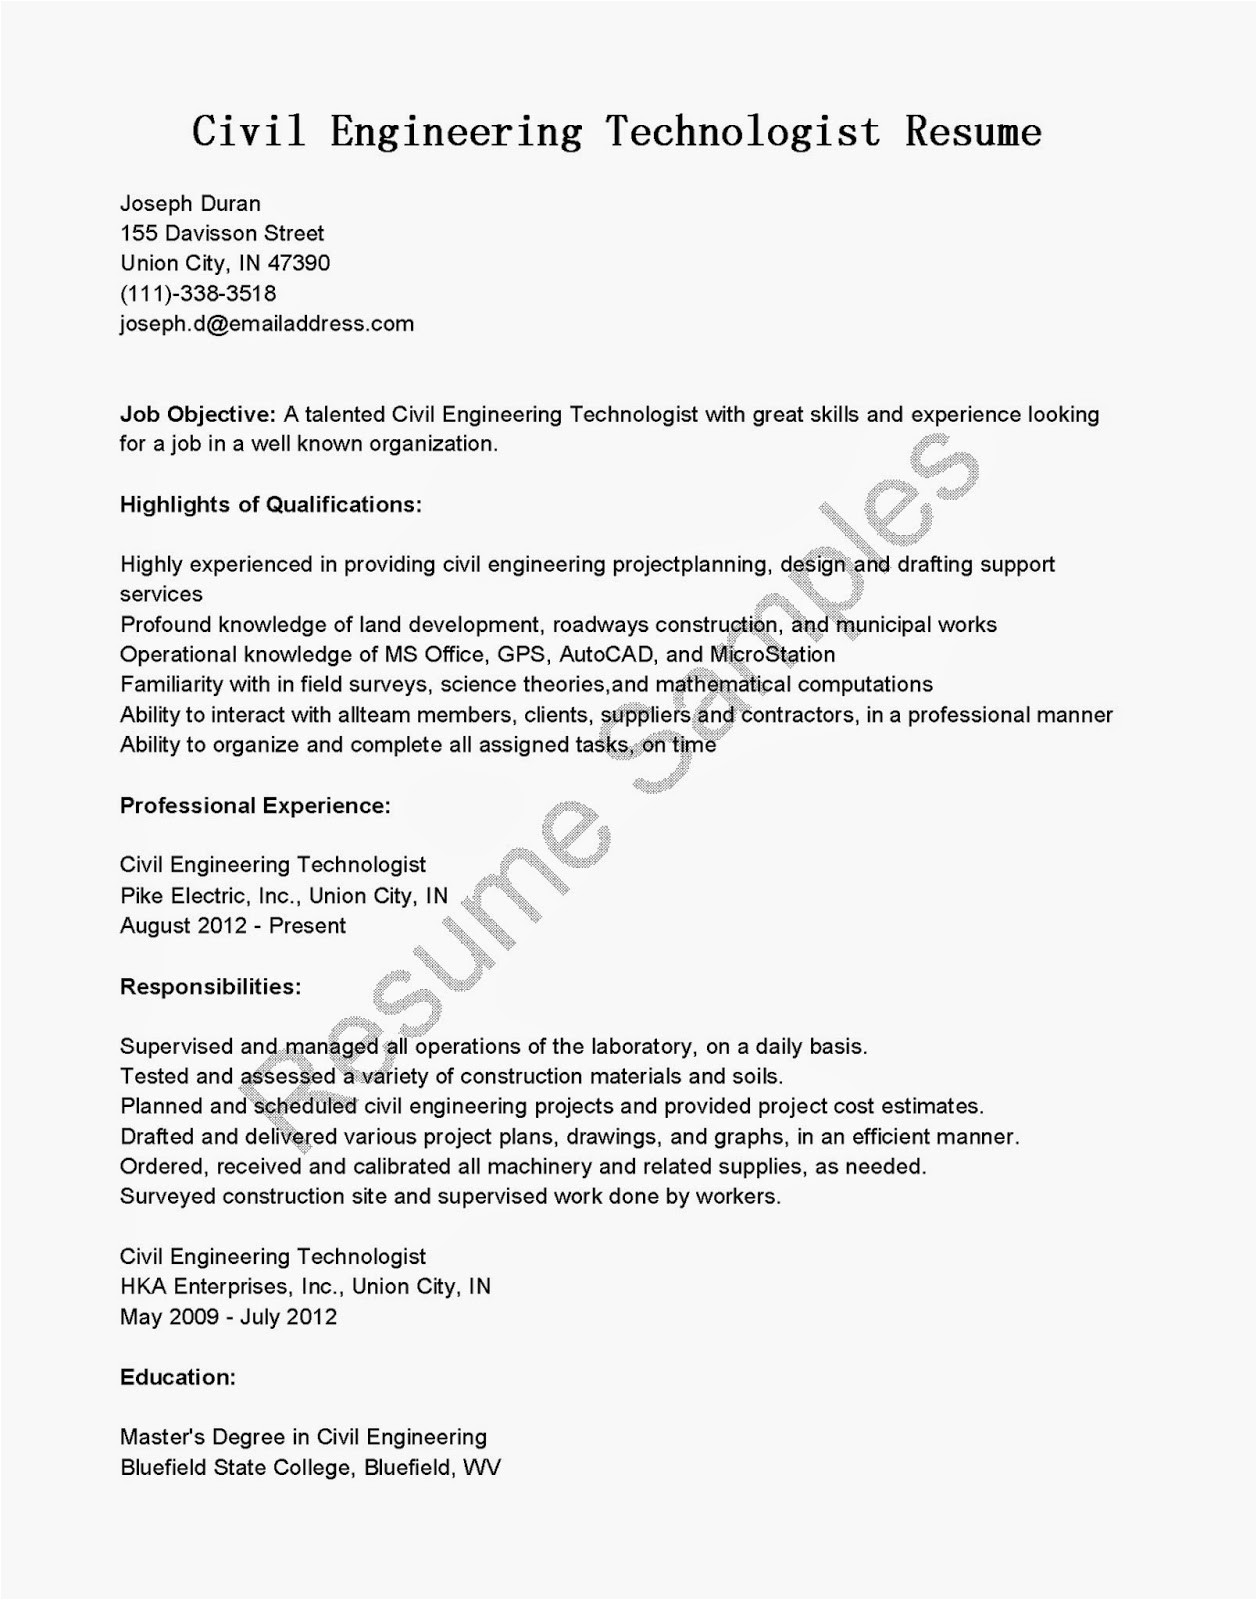 Civil Engineer Resume Objective Statements